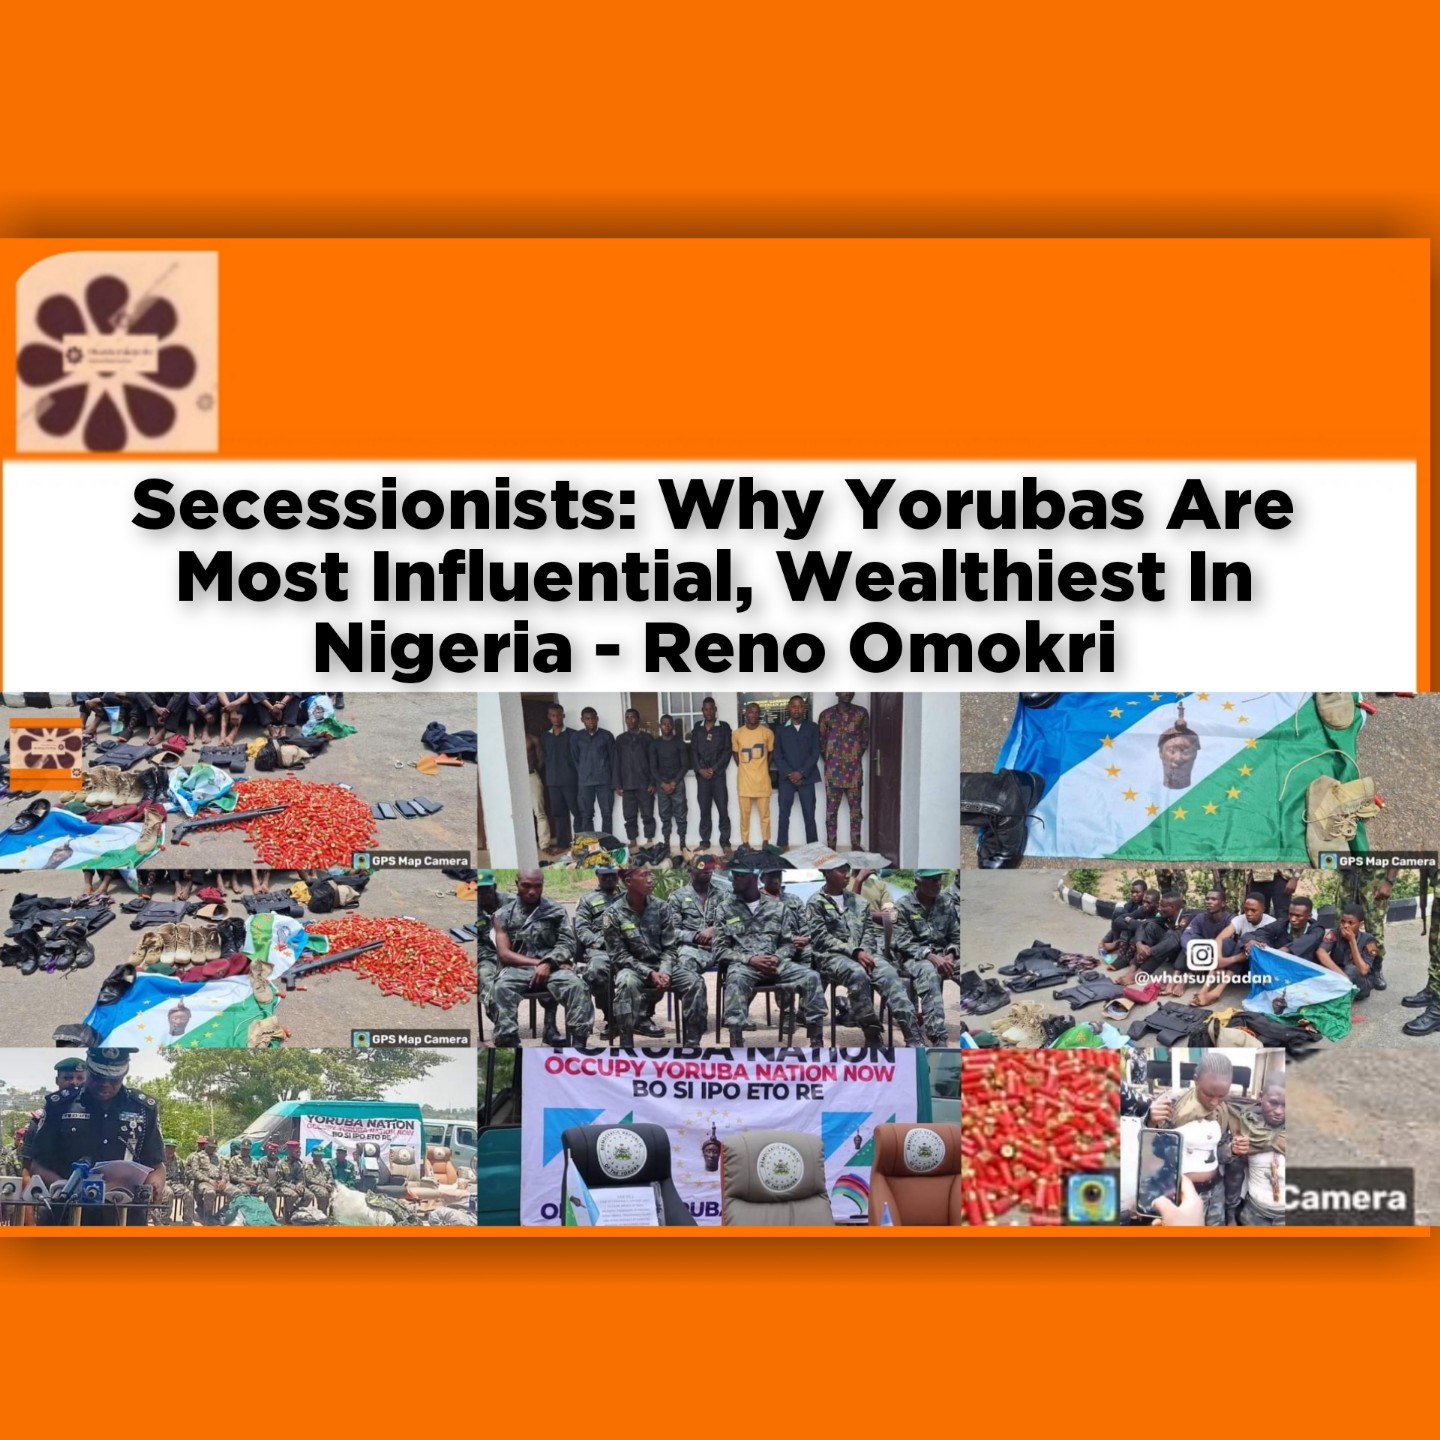 Secessionists: Why Yorubas Are Most Influential, Wealthiest In Nigeria - Reno Omokri ~ OsazuwaAkonedo #APGA